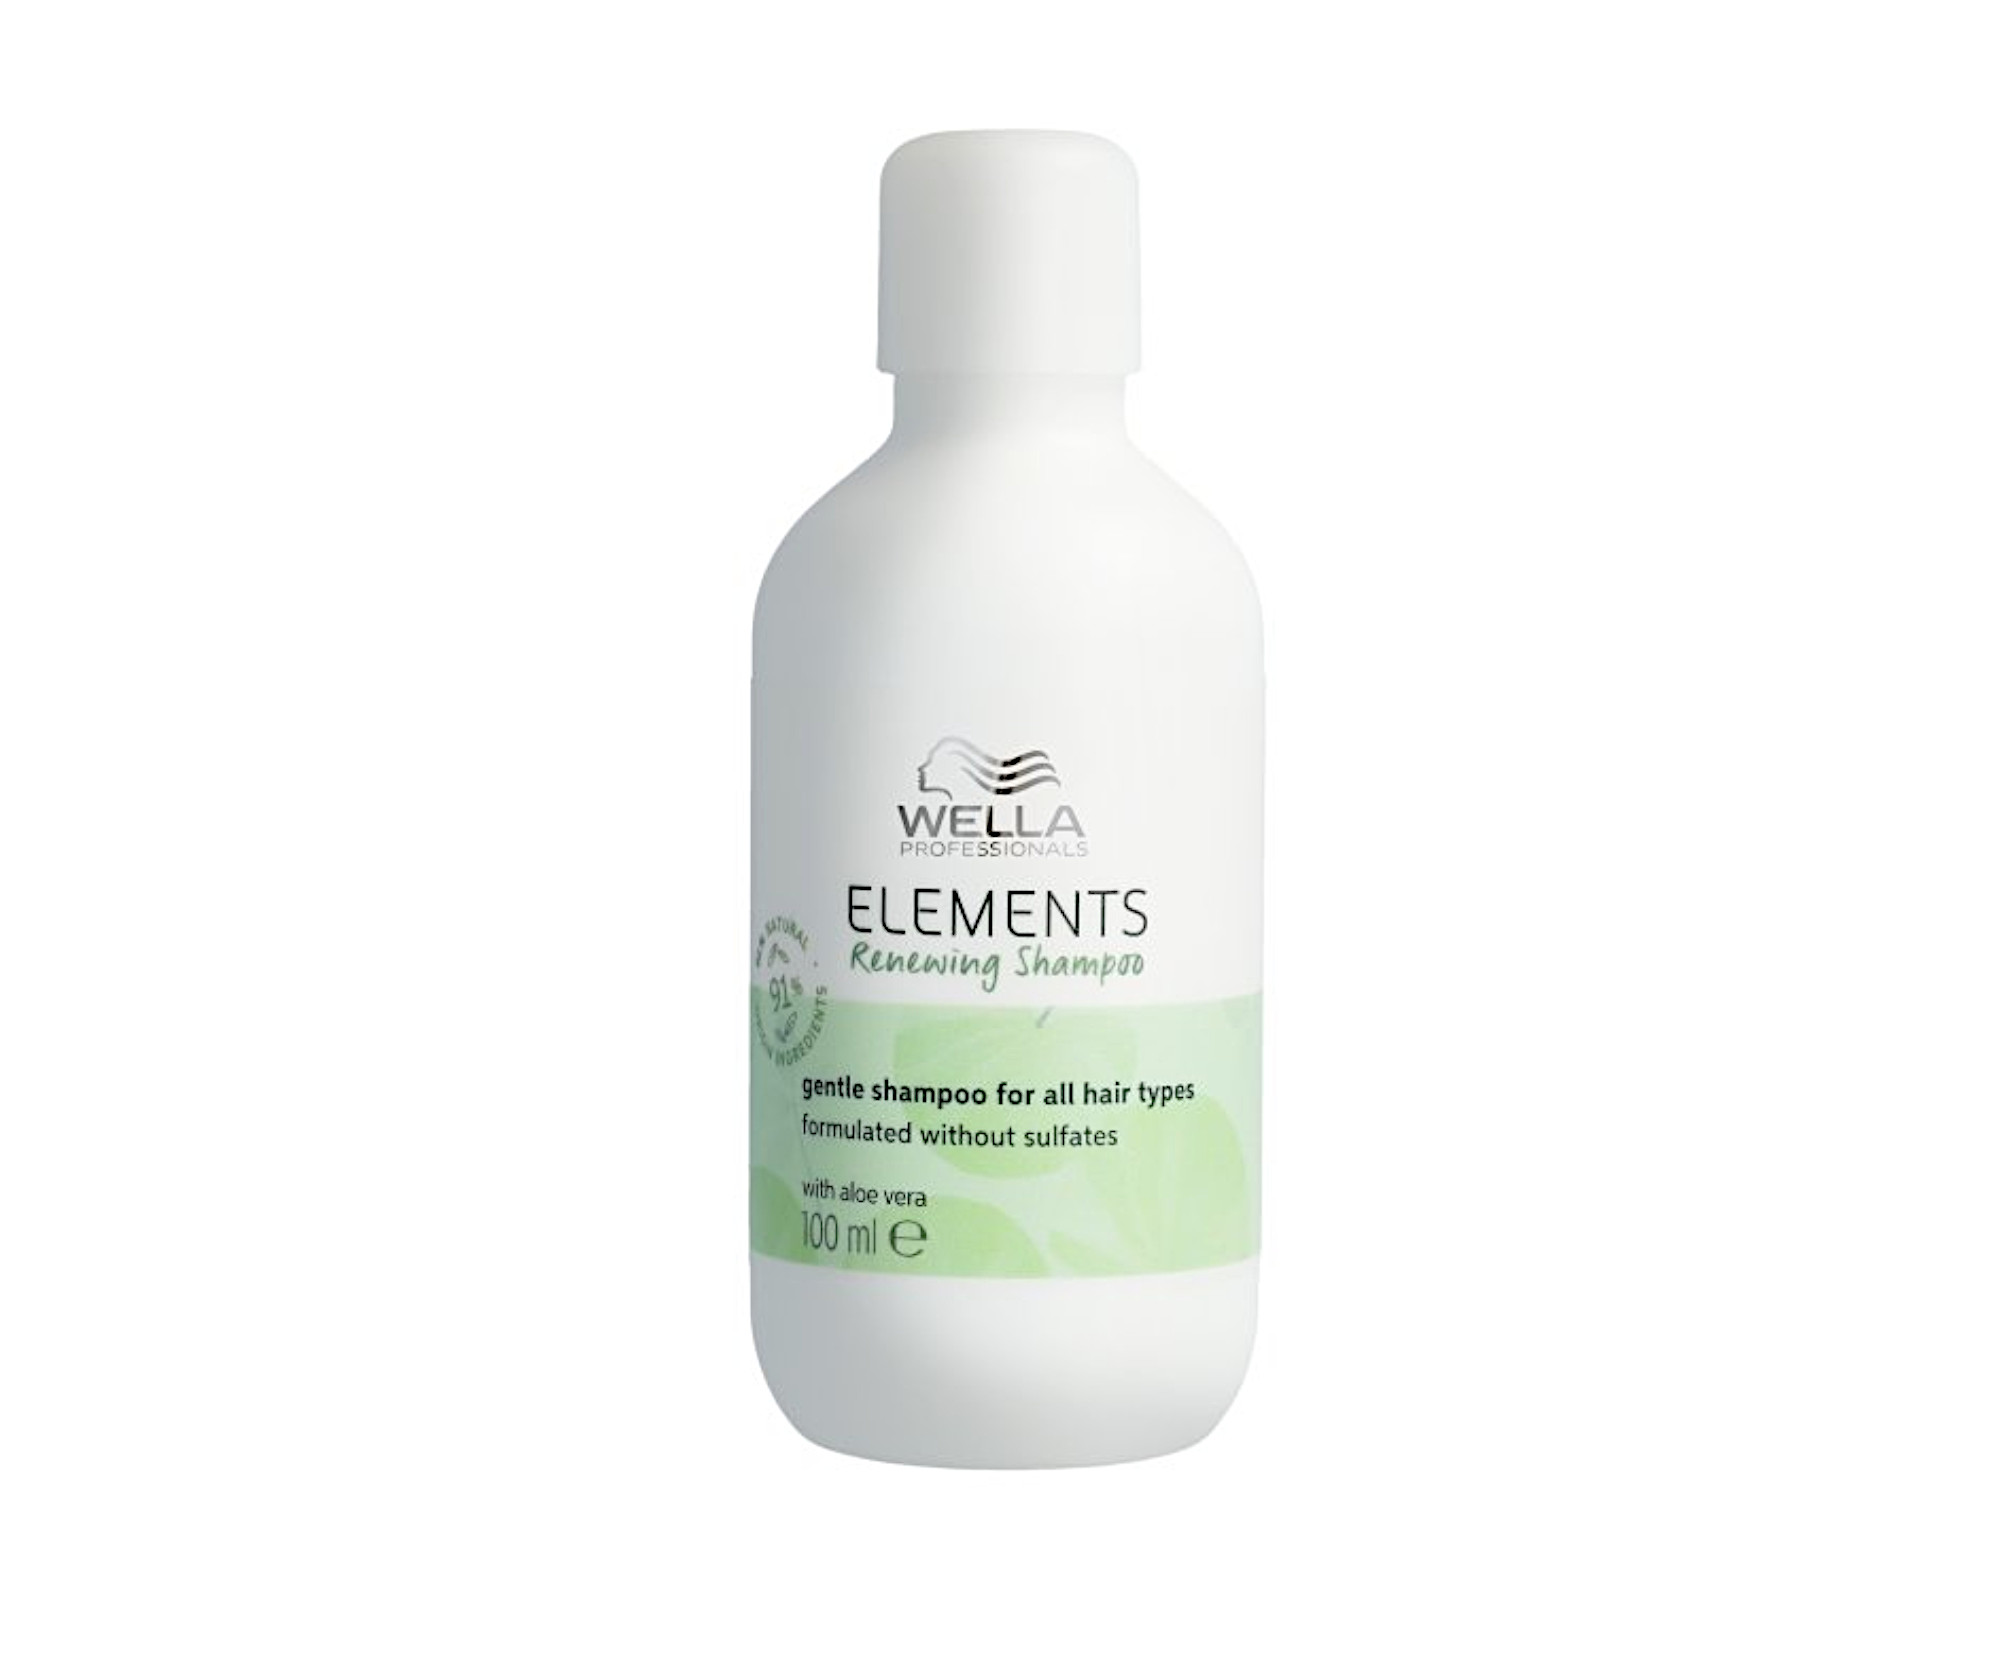 Obnovující šampon Wella Professionals Elements Renewing Shampoo - 100 ml (99350169349) + dárek zdarma